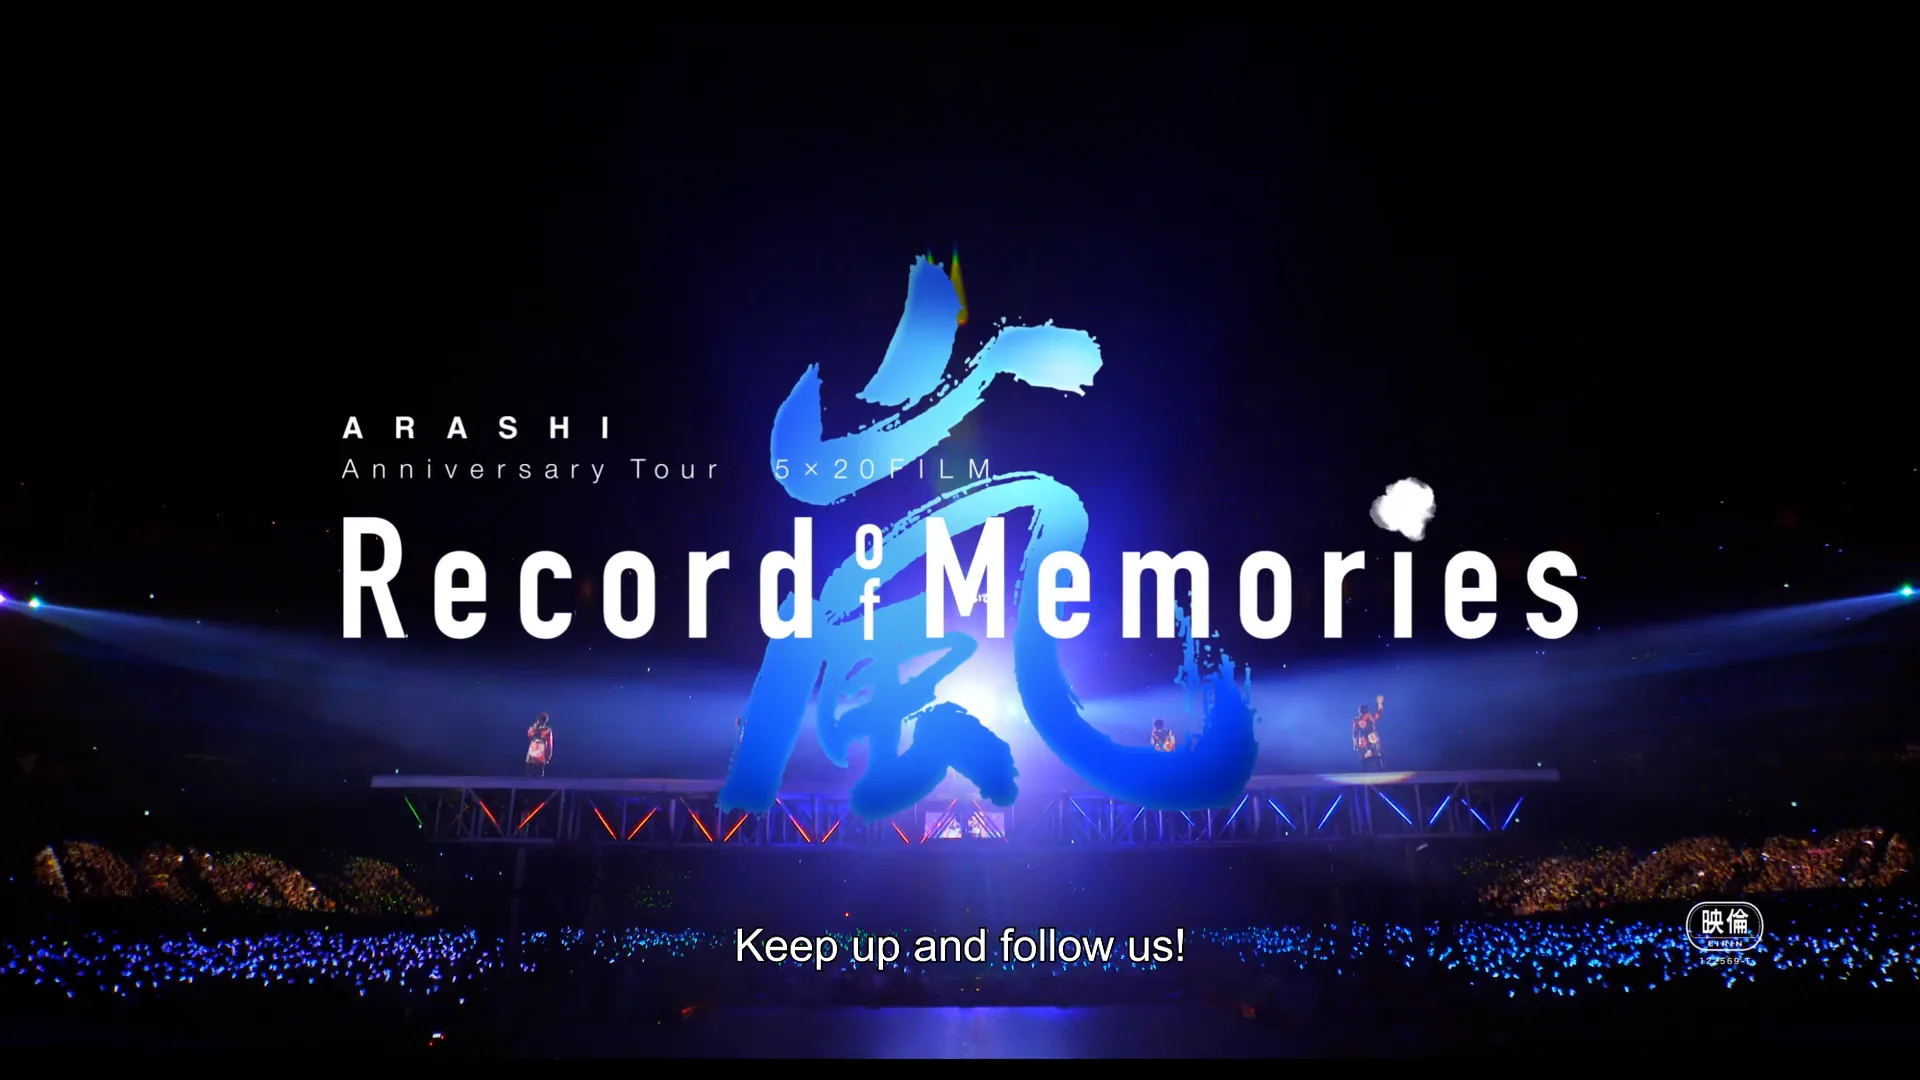 ARASHI ANNIVERSARY TOUR 5×20 FILM “RECORD OF MEMORIES